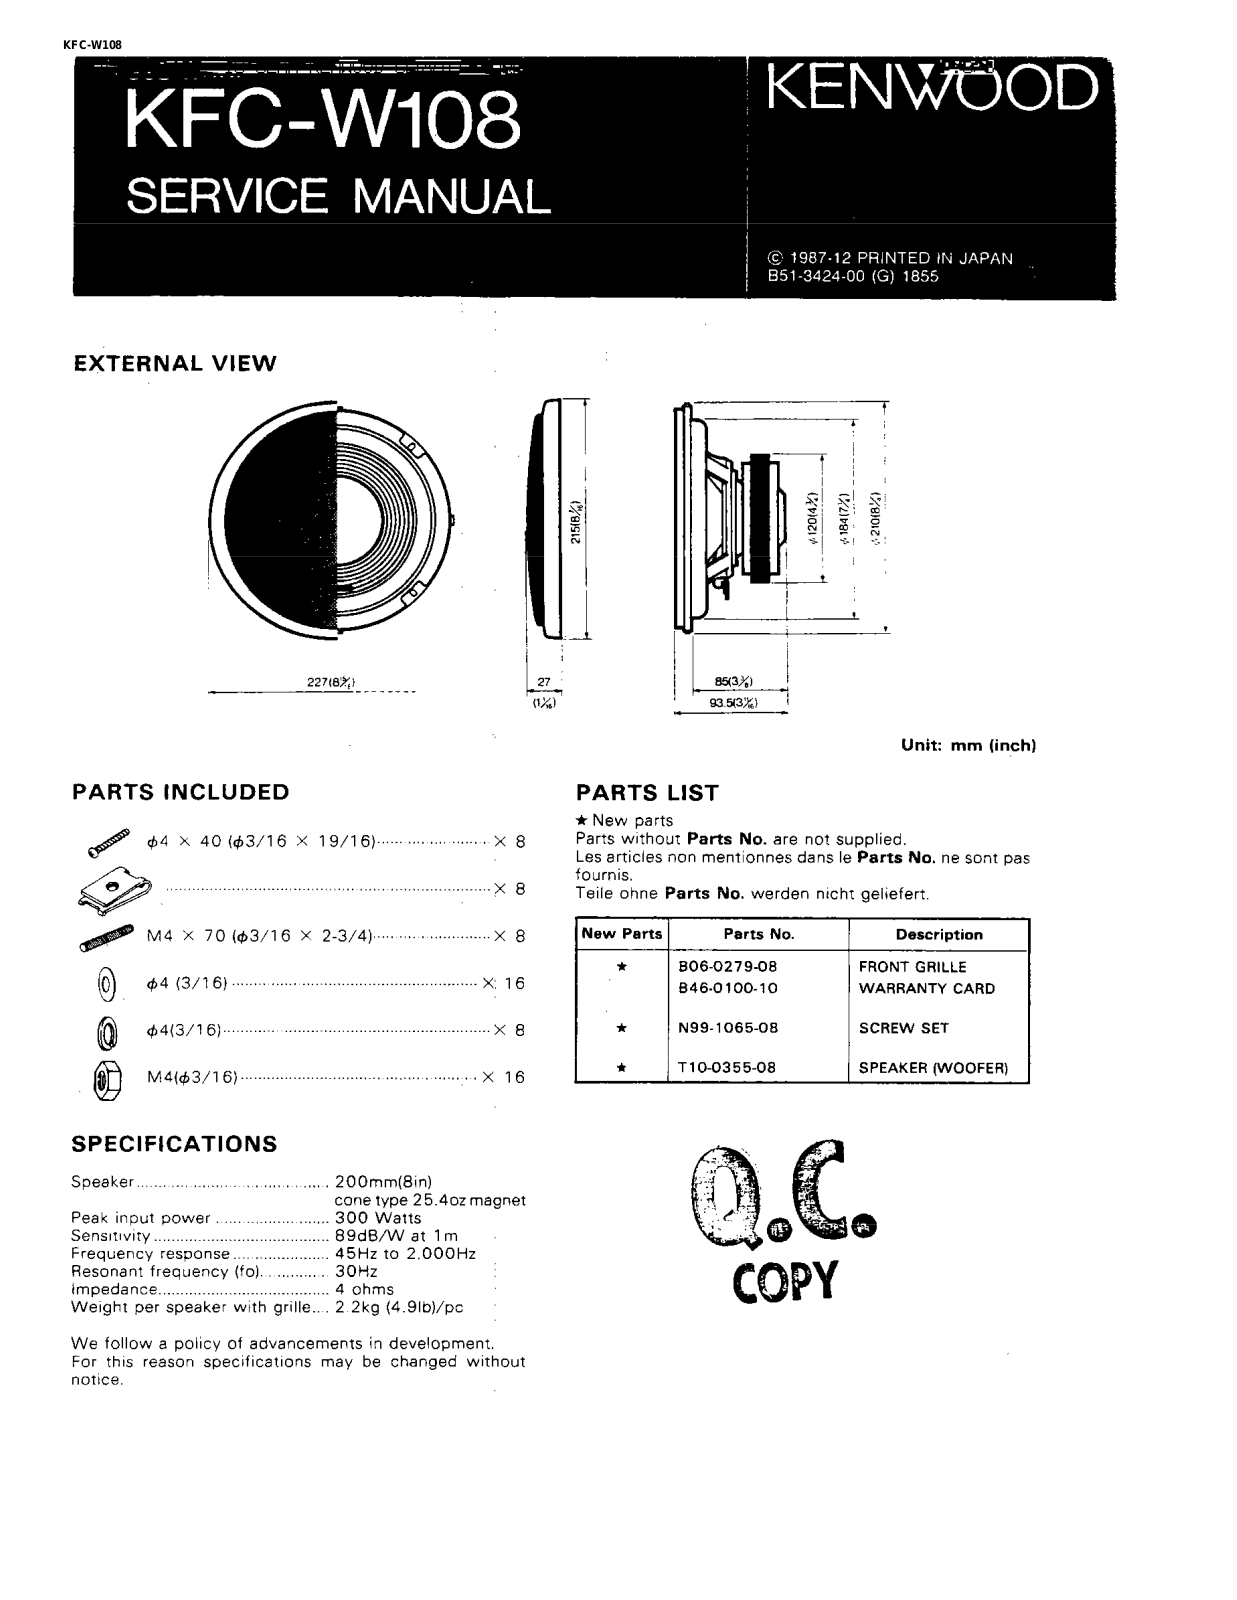 Kenwood KFC-W108 Service Manual